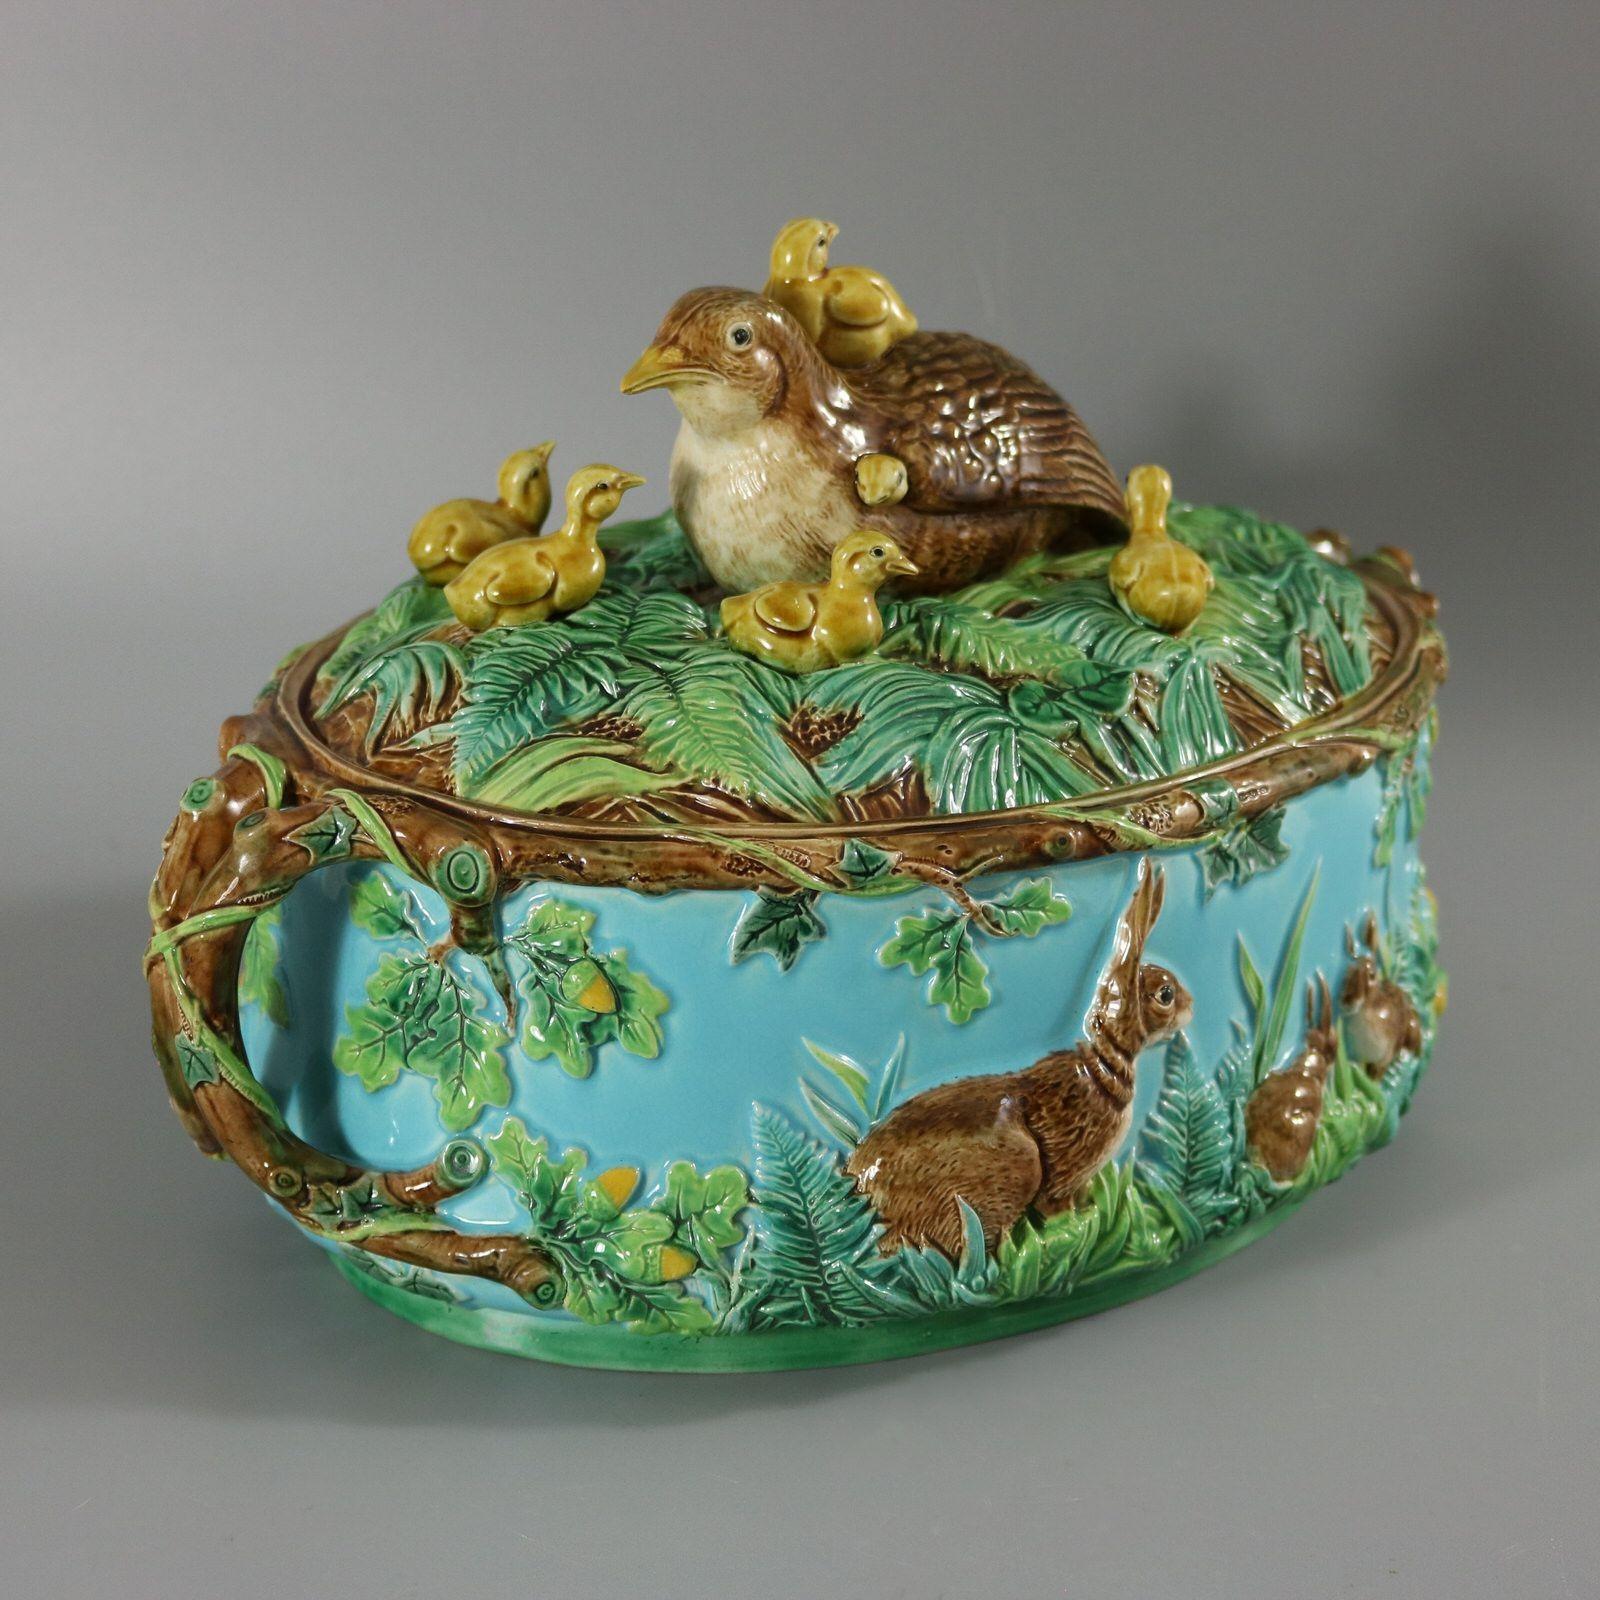 Late 19th Century George Jones Majolica Partridge and Chicks Game Pie Dish